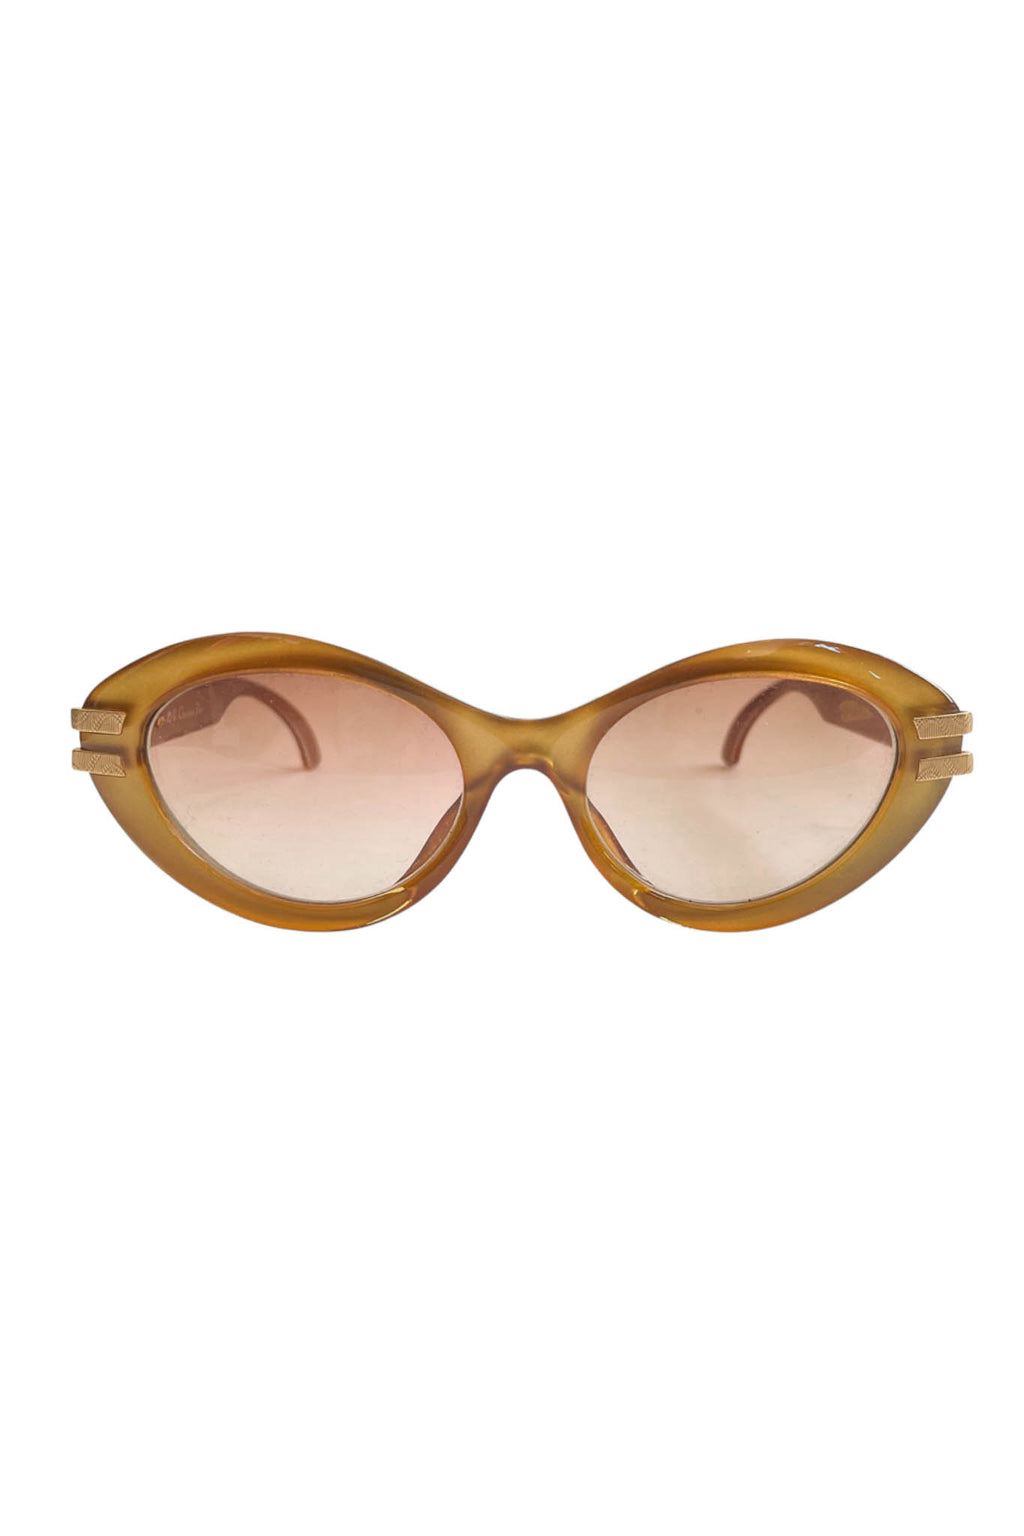 Dior Gold Cat Eye Sunglasses